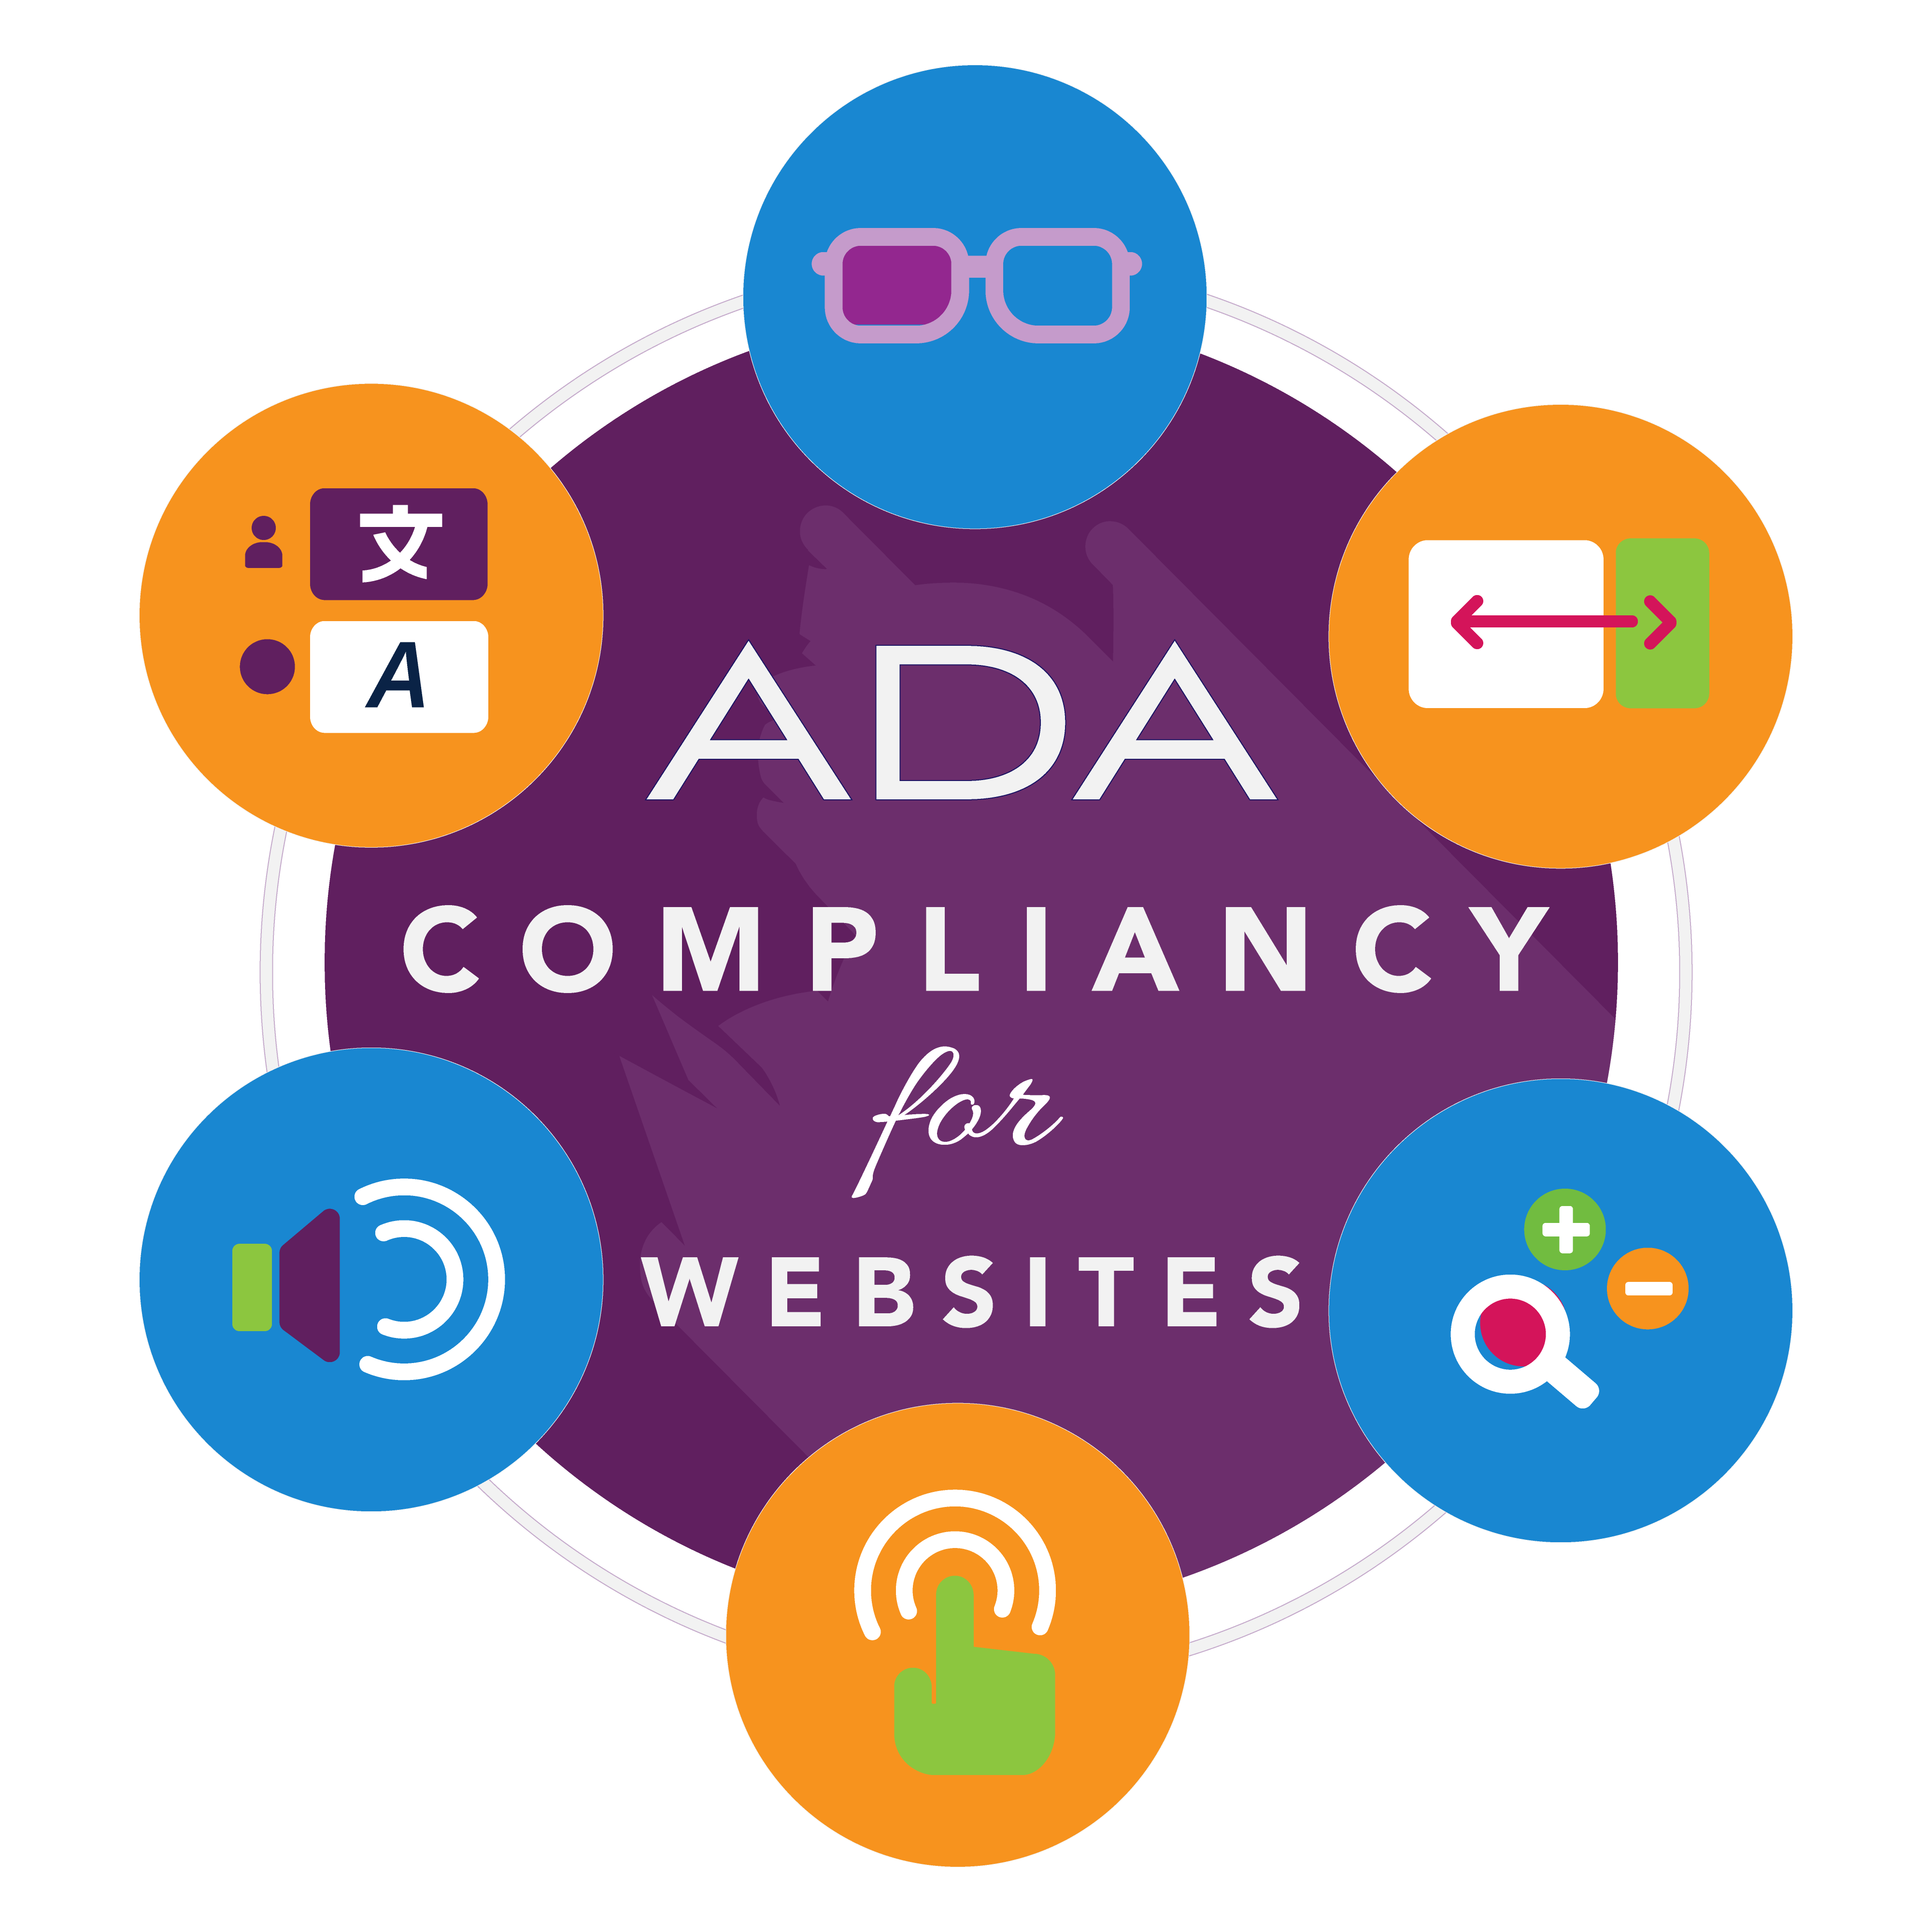 ADA Compliancy Icon for websites